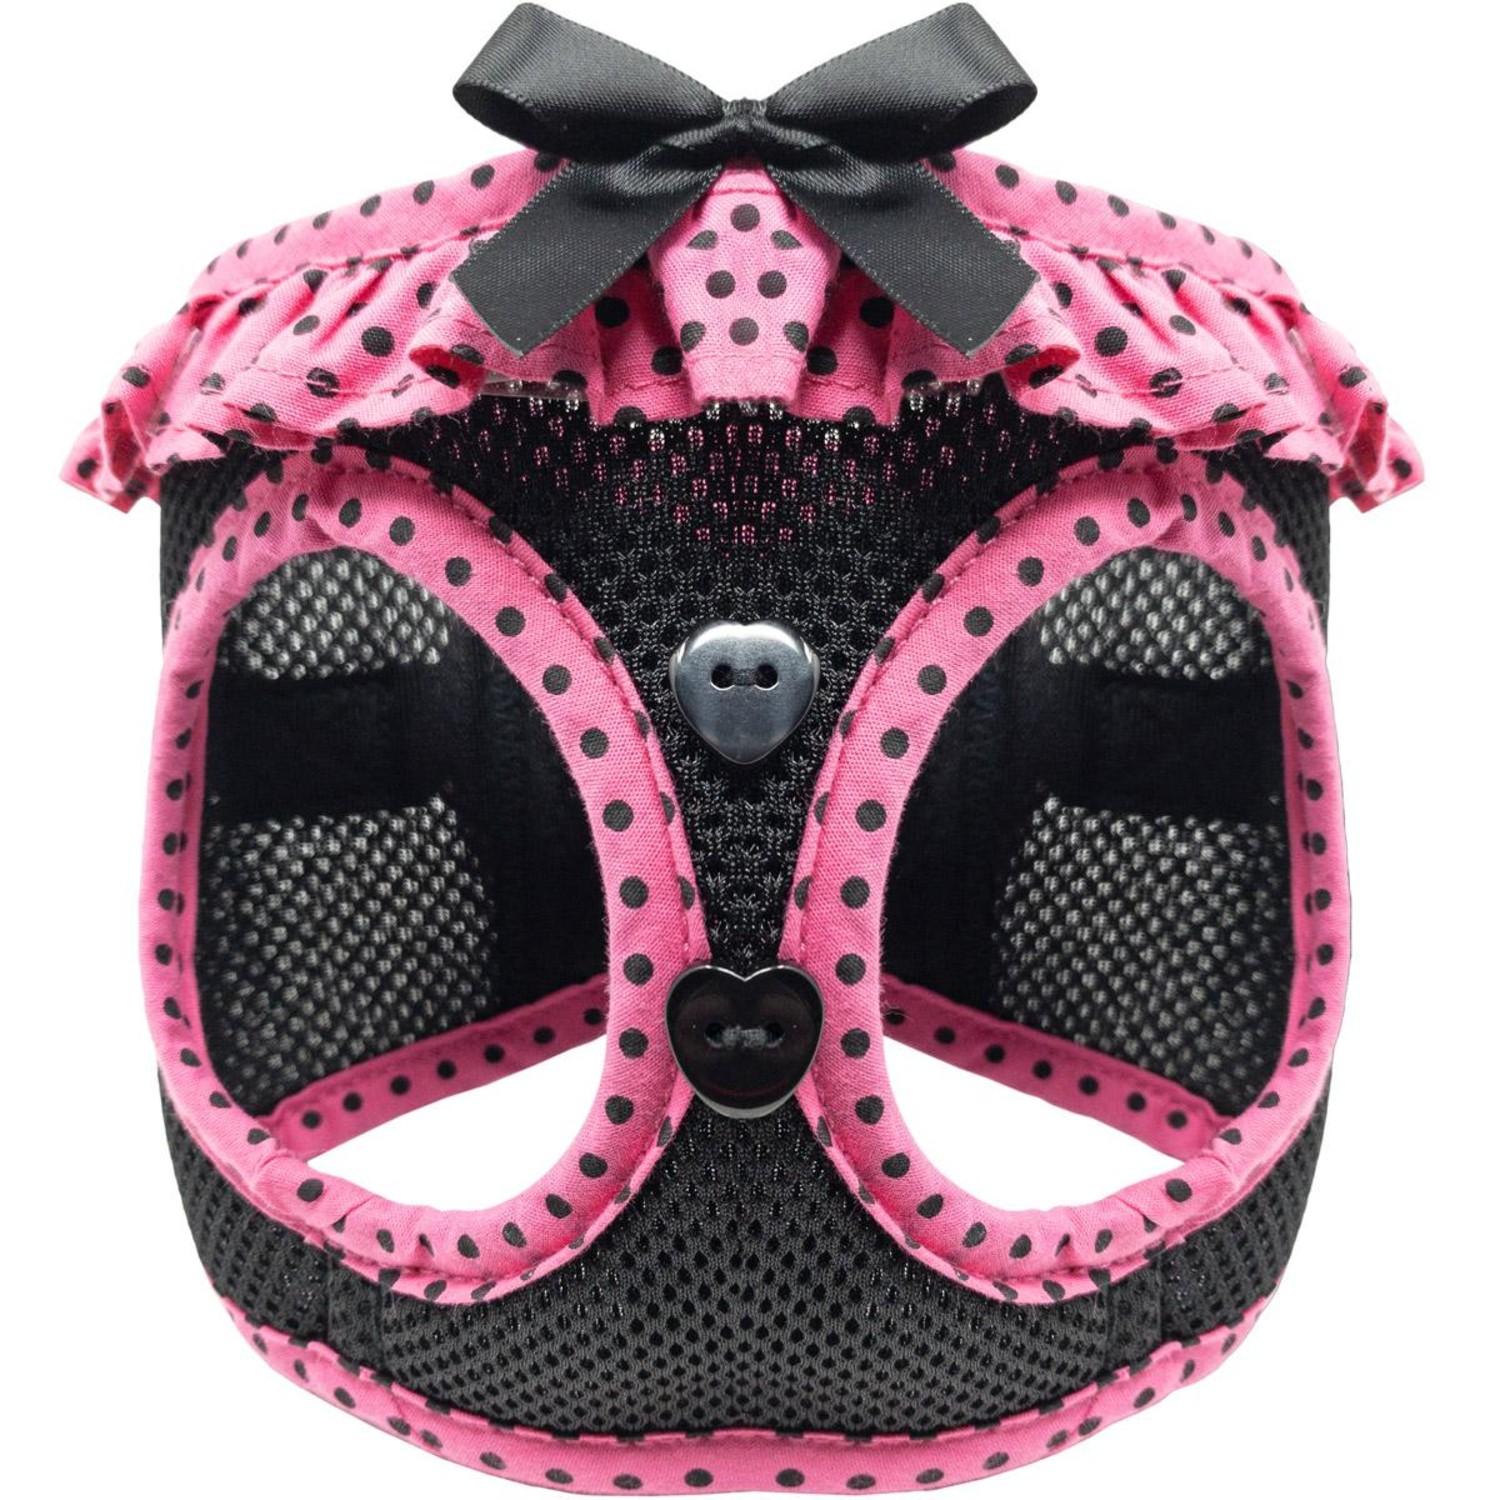 American River Choke-Free Dog Harness by Doggie Design - Hot Pink & Black Polka Dot